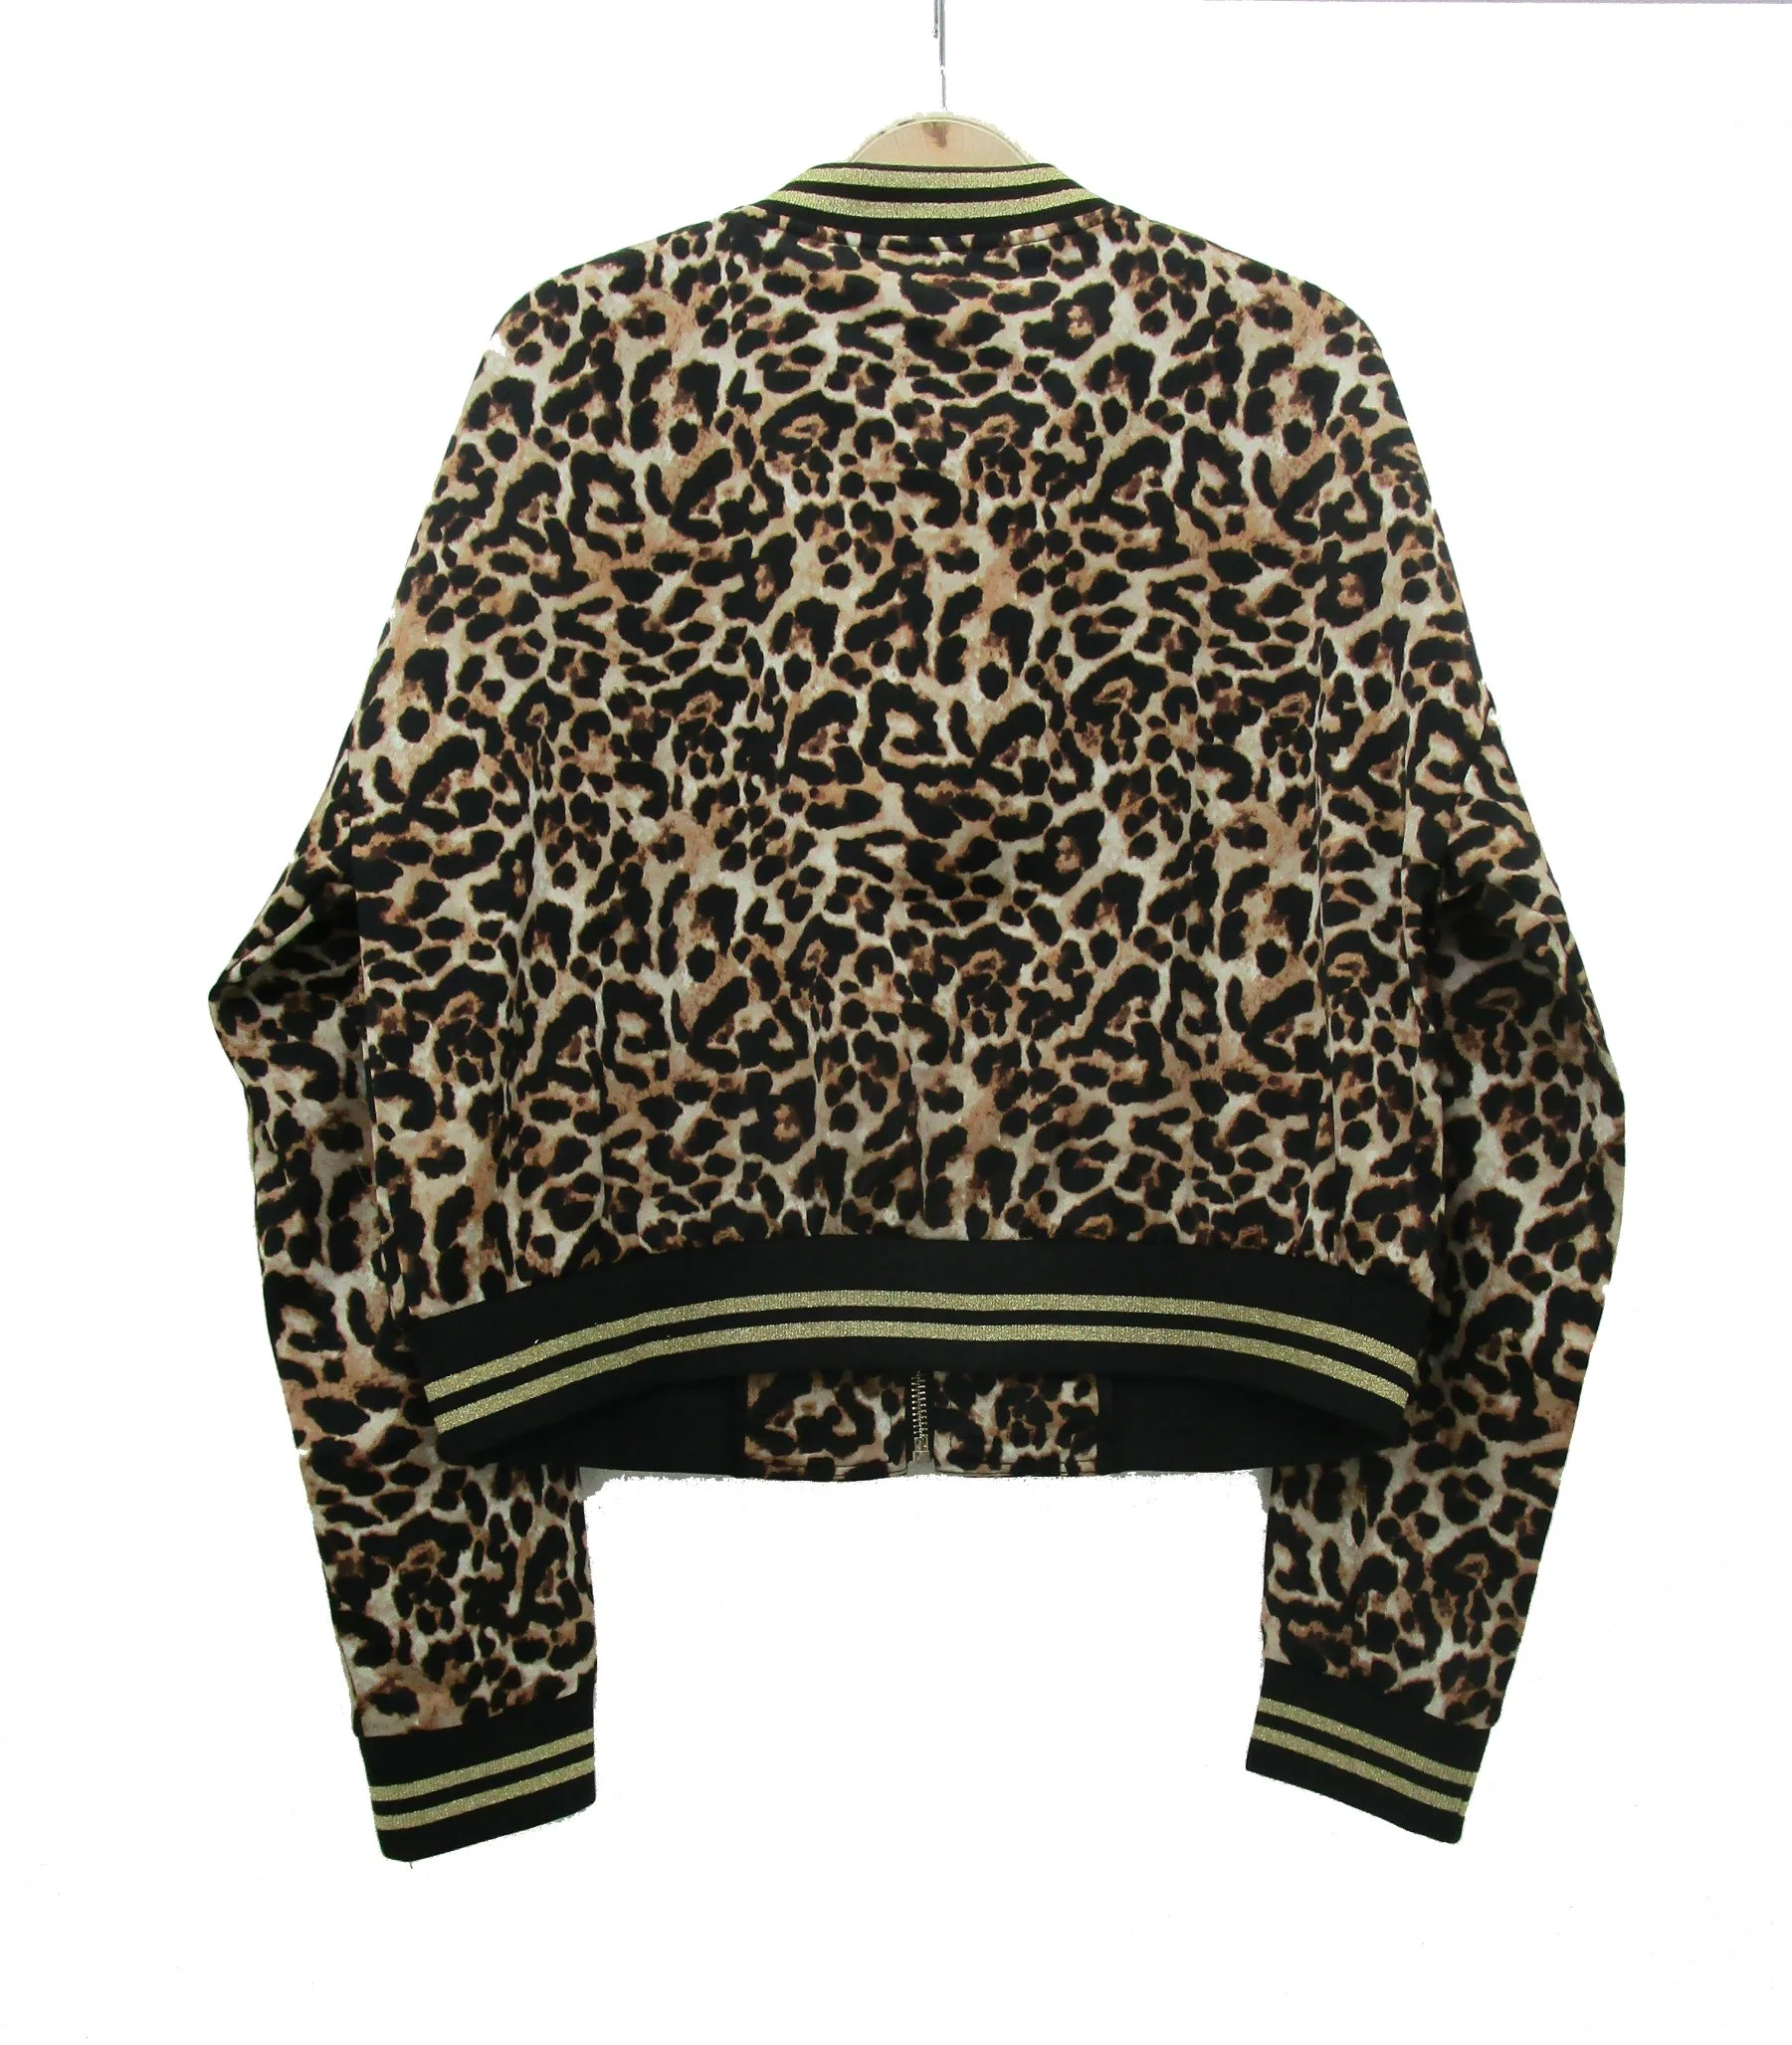 La moda femenina chaqueta con cremallera de leopardo